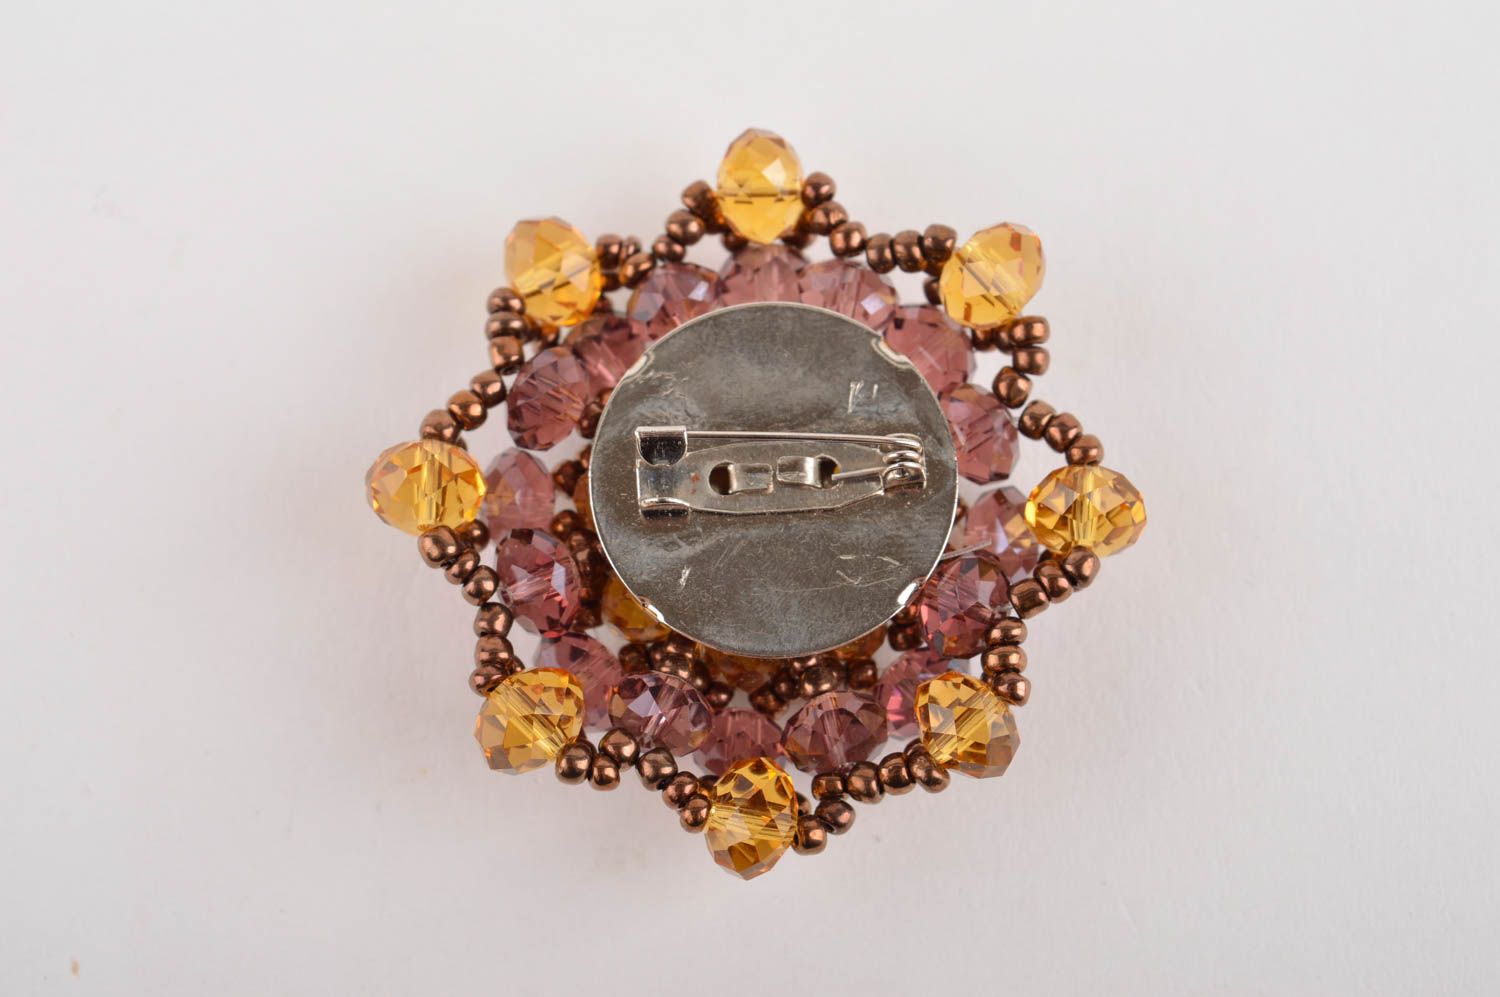 Stylish handmade beaded brooch jewelry artisan jewelry designs gifts for her photo 4